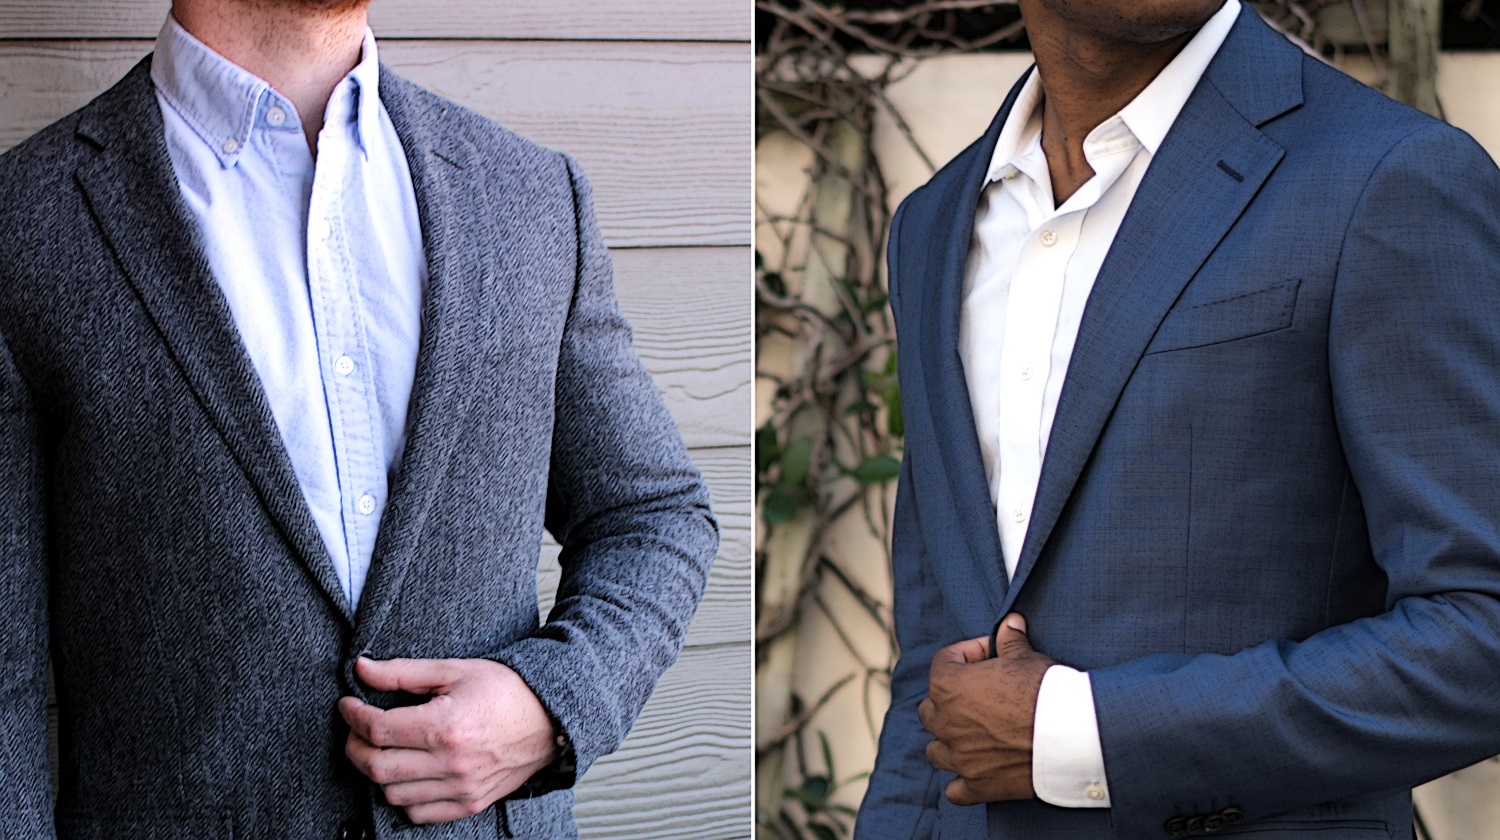 Sportcoat / Blazer vs Suit Jacket â The Four Key Differences